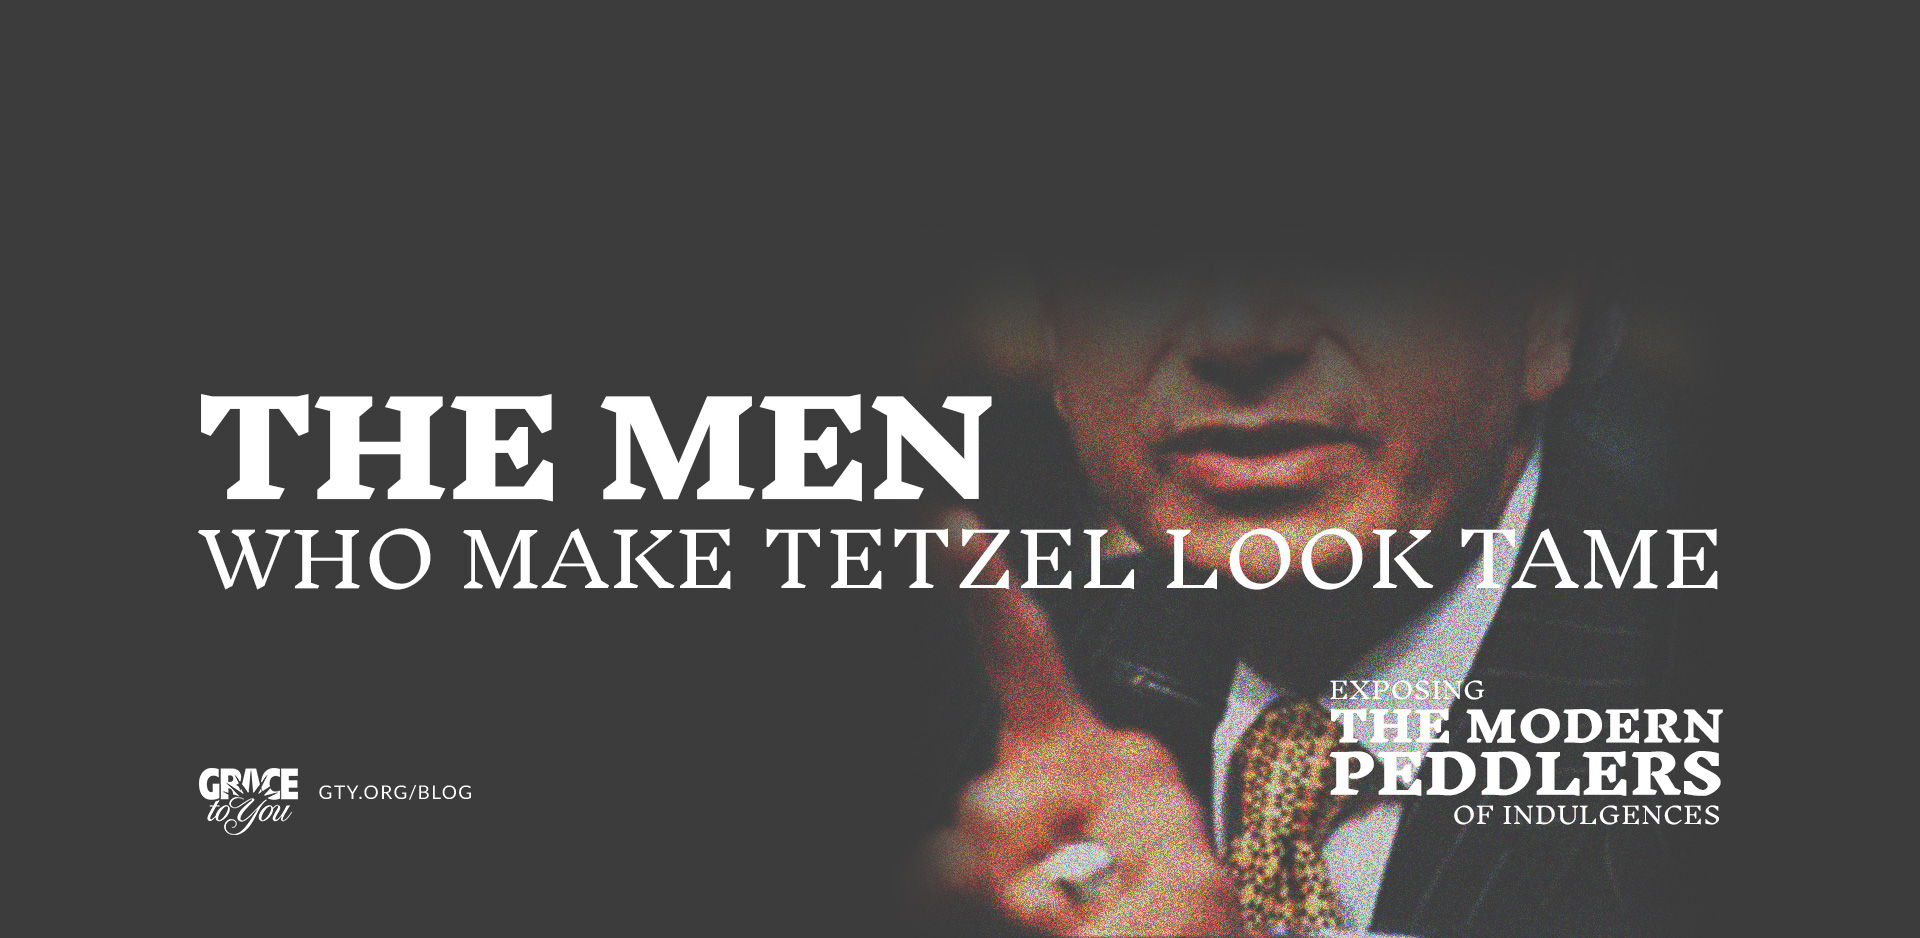 Blog Post - The Men Who Make Tetzel Look Tame